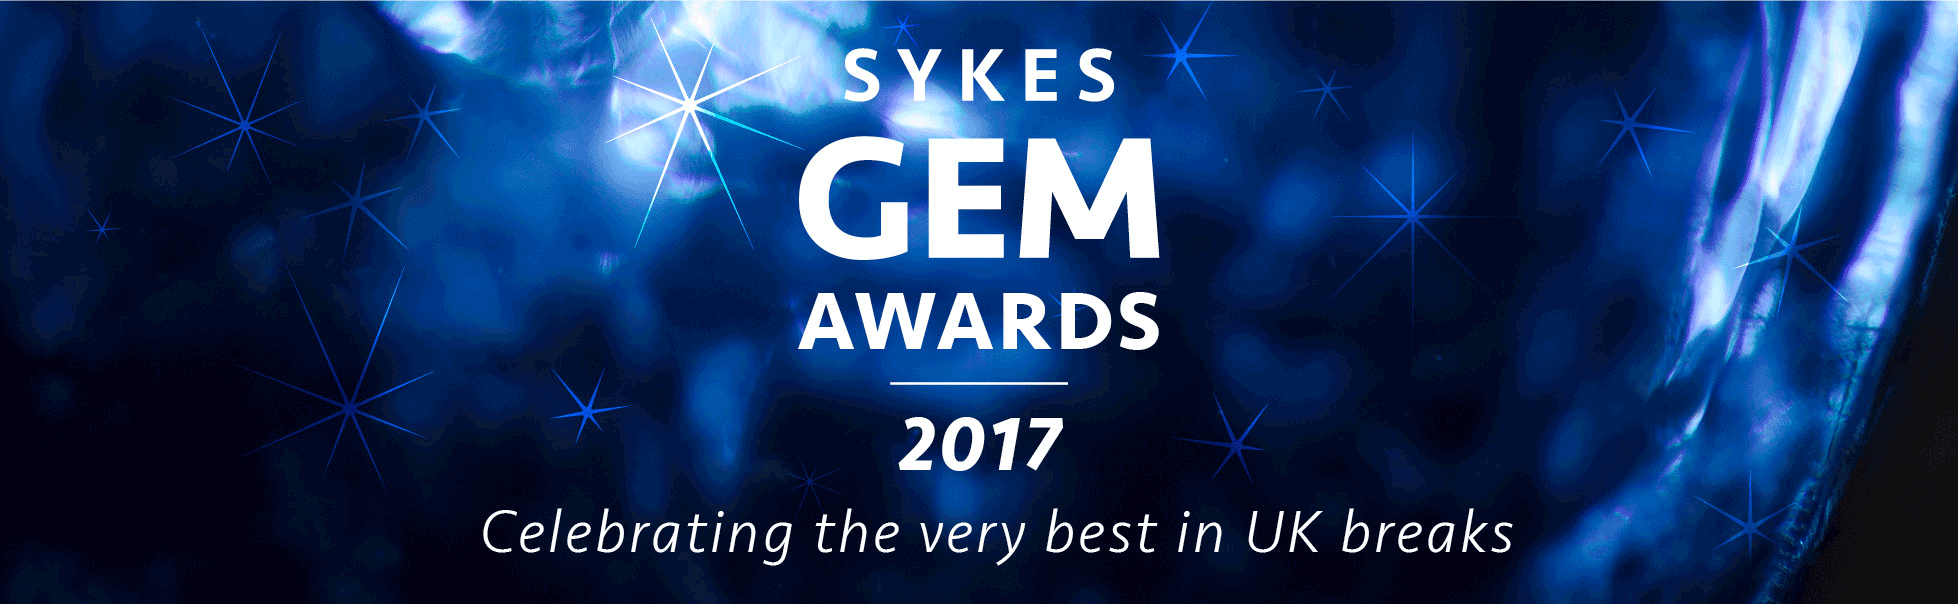 sykes gems awards 2017